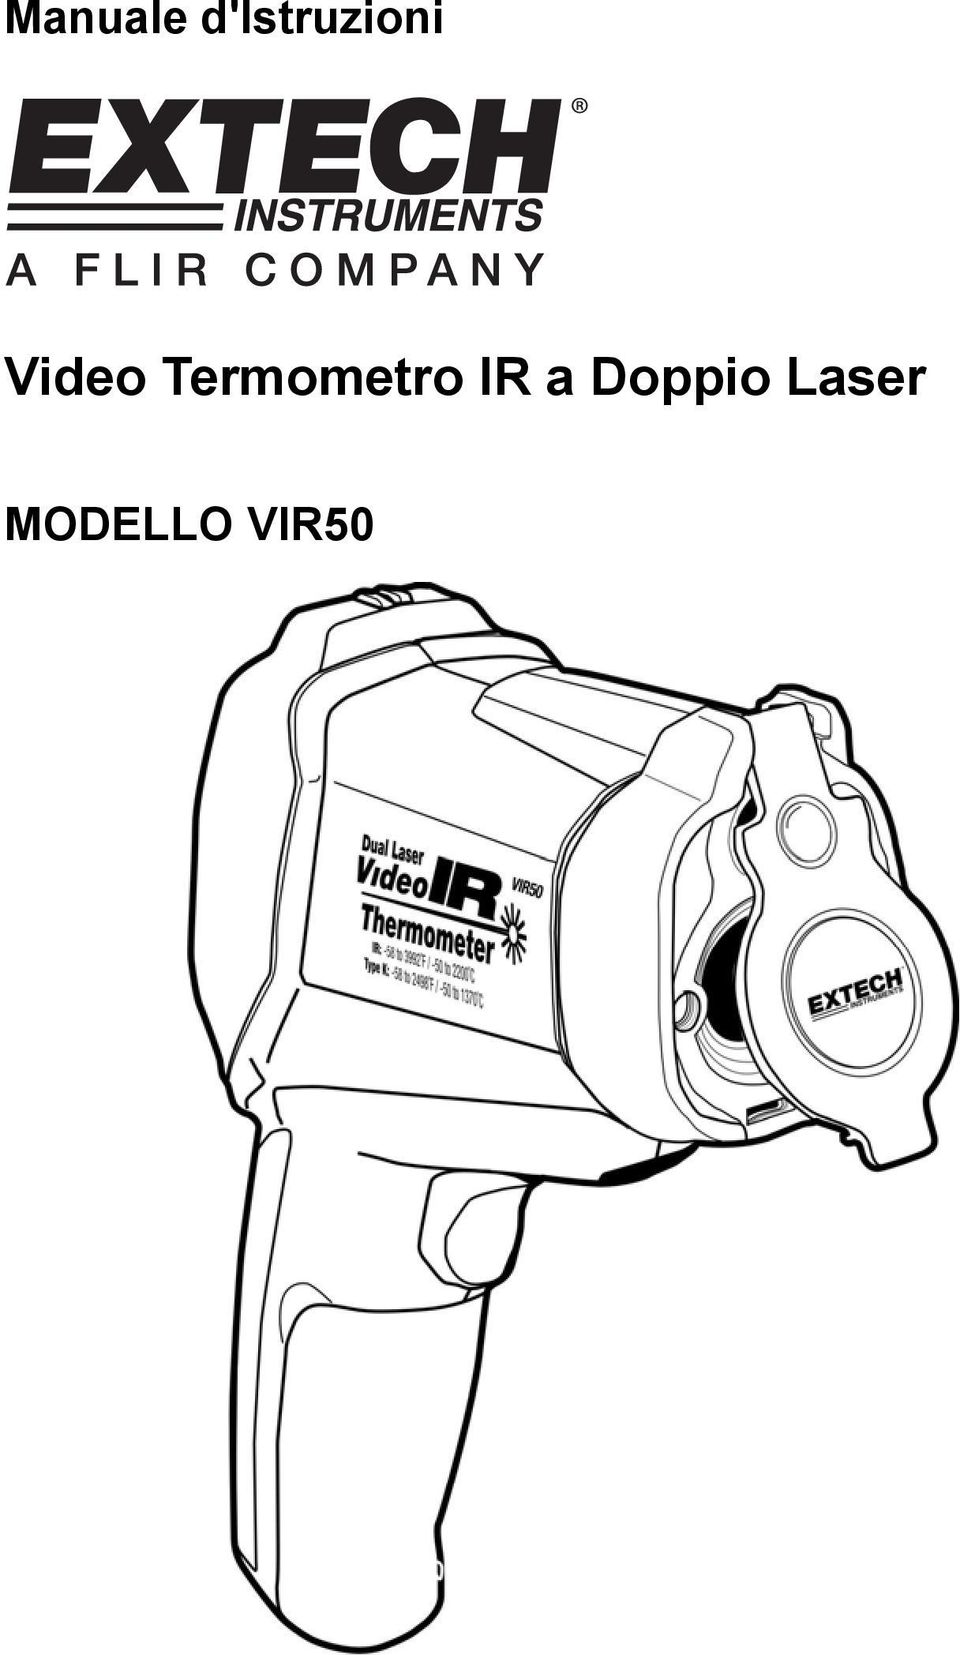 Video Termometro